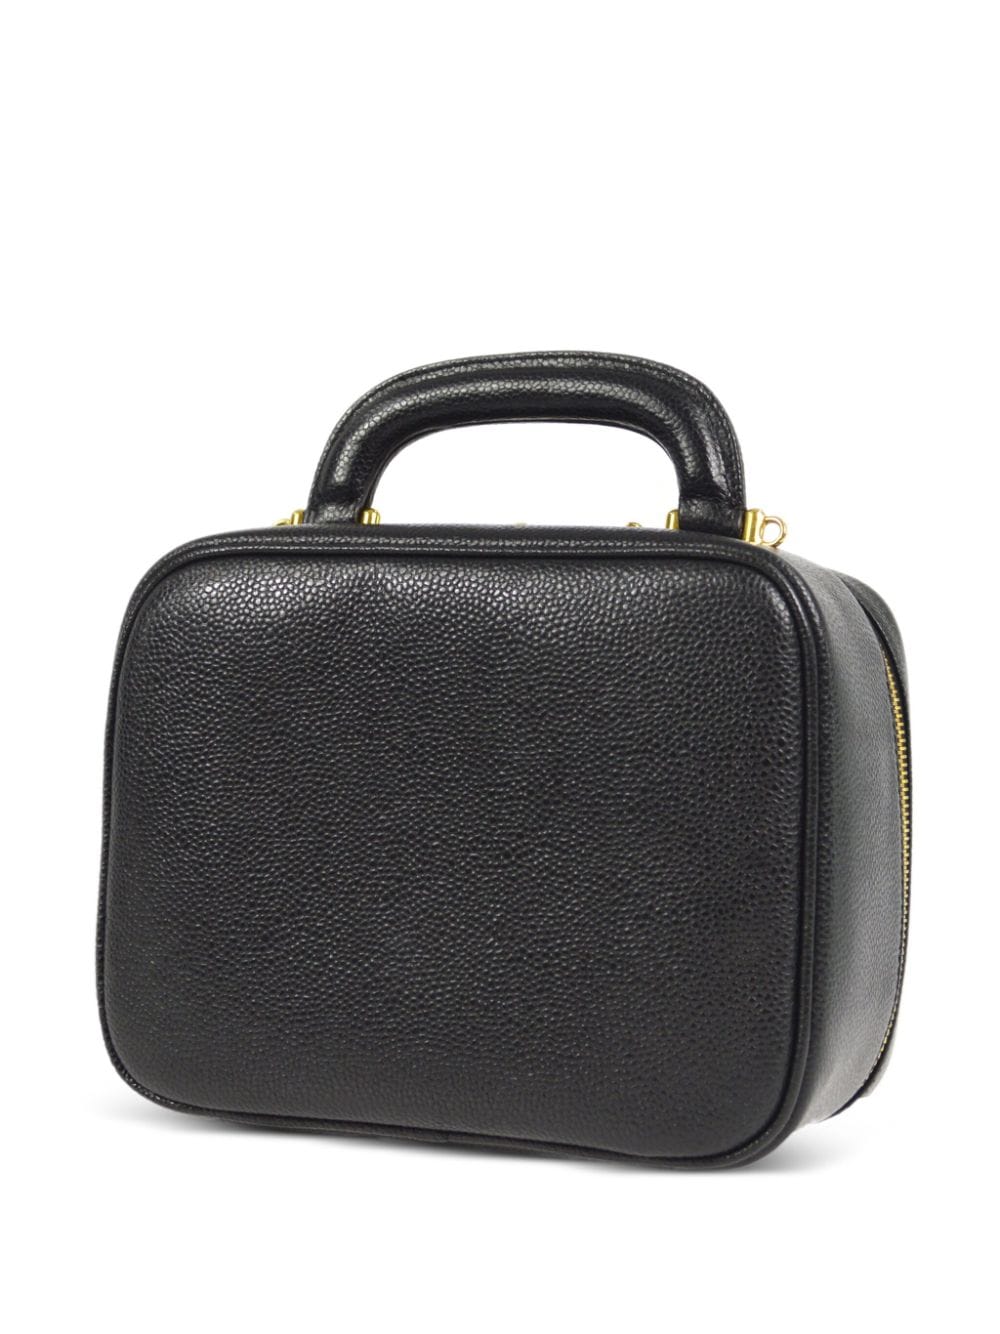 CHANEL, Bags, Authentic Chanel Cc Cc Mark Vanity Bag 2way Hand Bag  Shoulder Bag